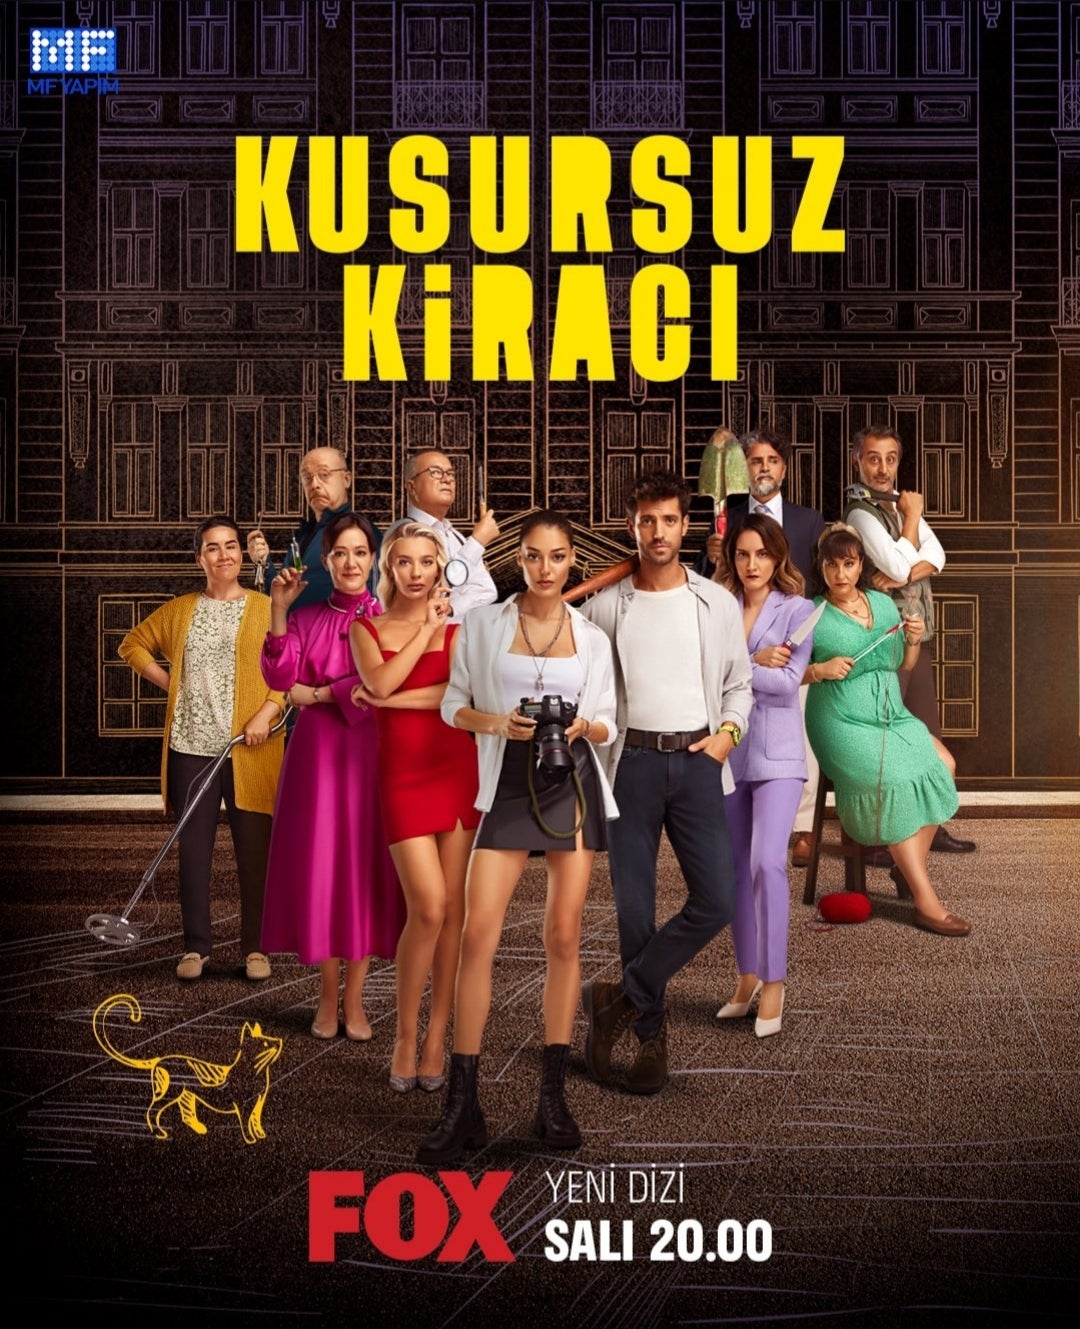 TV ratings for Kusursuz Kiraci in Malaysia. FOX Türkiye TV series